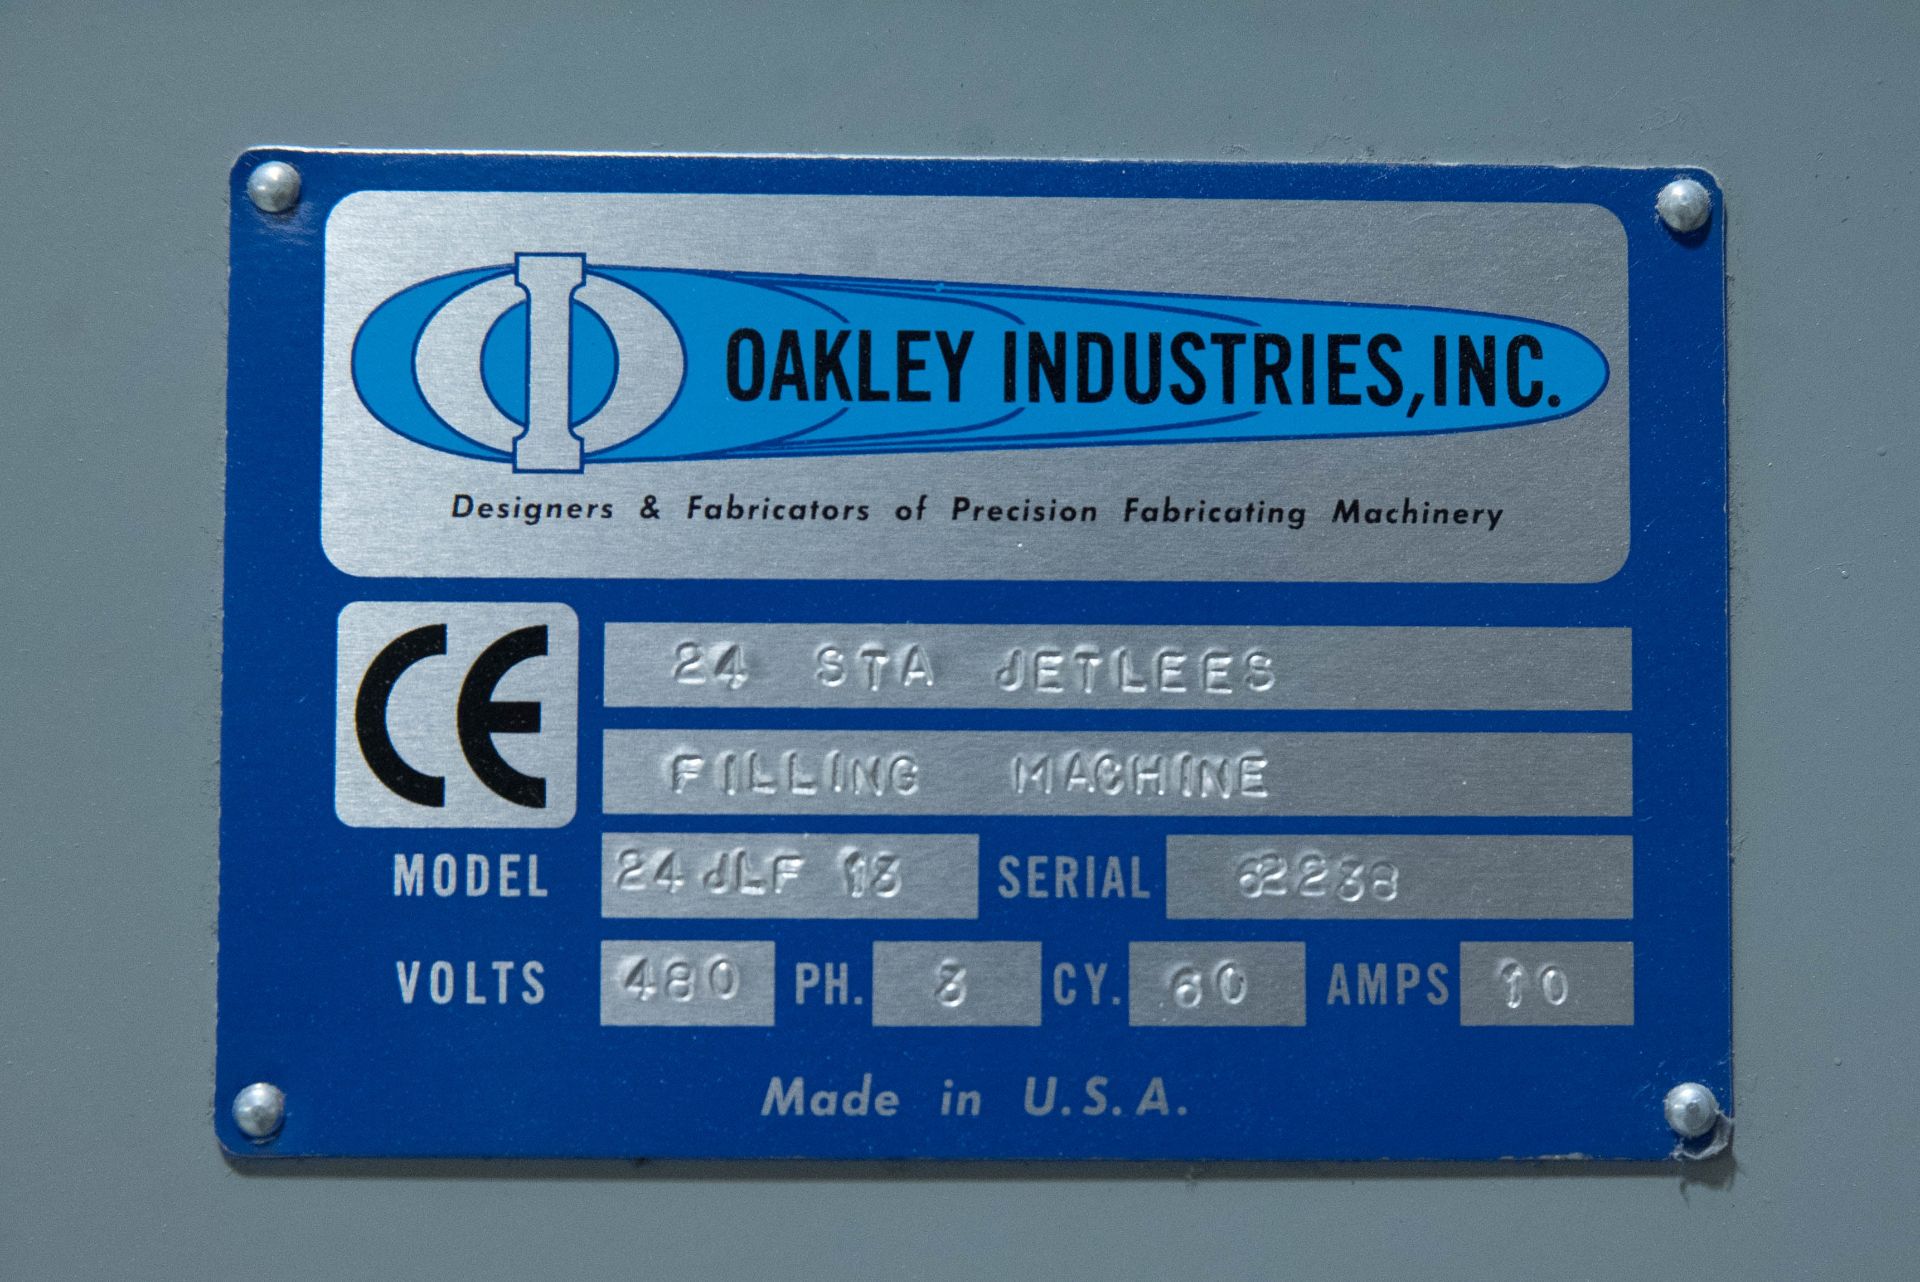 Oakley Industries Mdl: 24JLF13 24 Station Jetless Fast Filling Machine, S/N: 62238 - Image 3 of 3